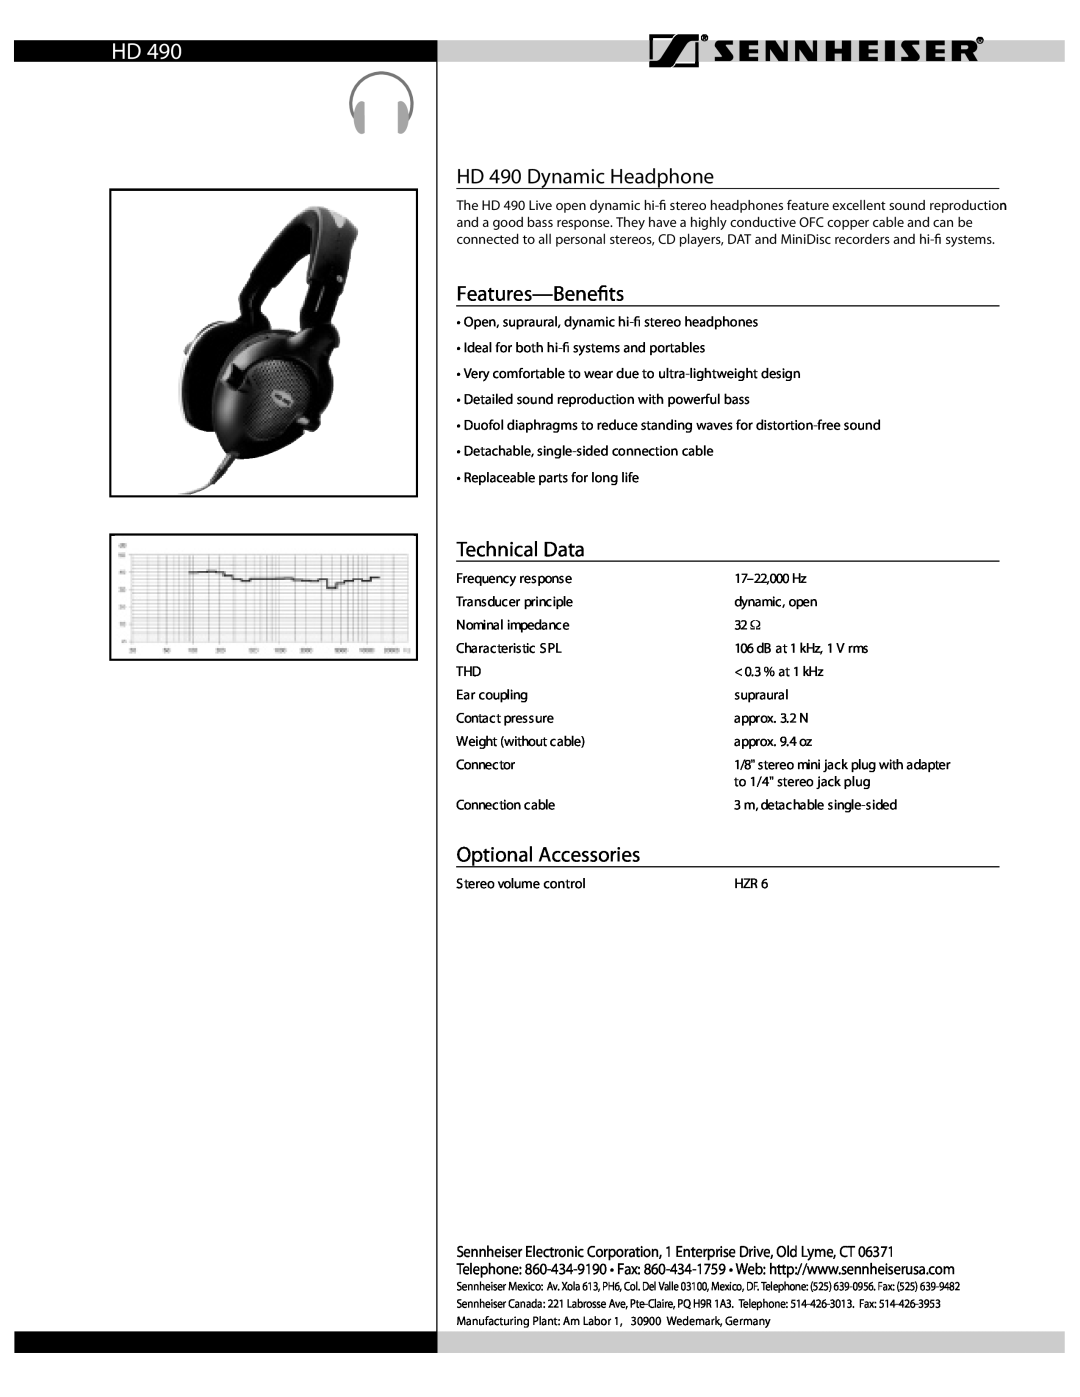 Sennheiser manual HD 490 Dynamic Headphone, Features-Benets, Technical Data, Optional Accessories 